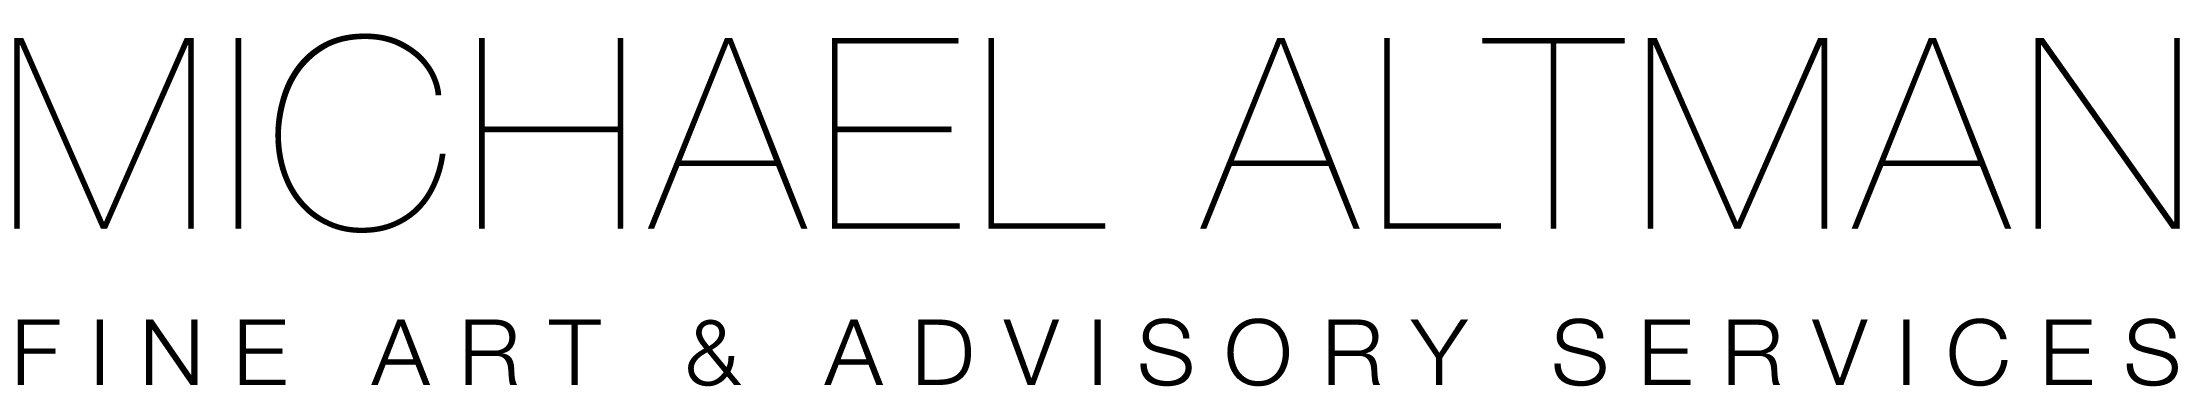 Michael Altman Fine Art & Advisory Services company logo